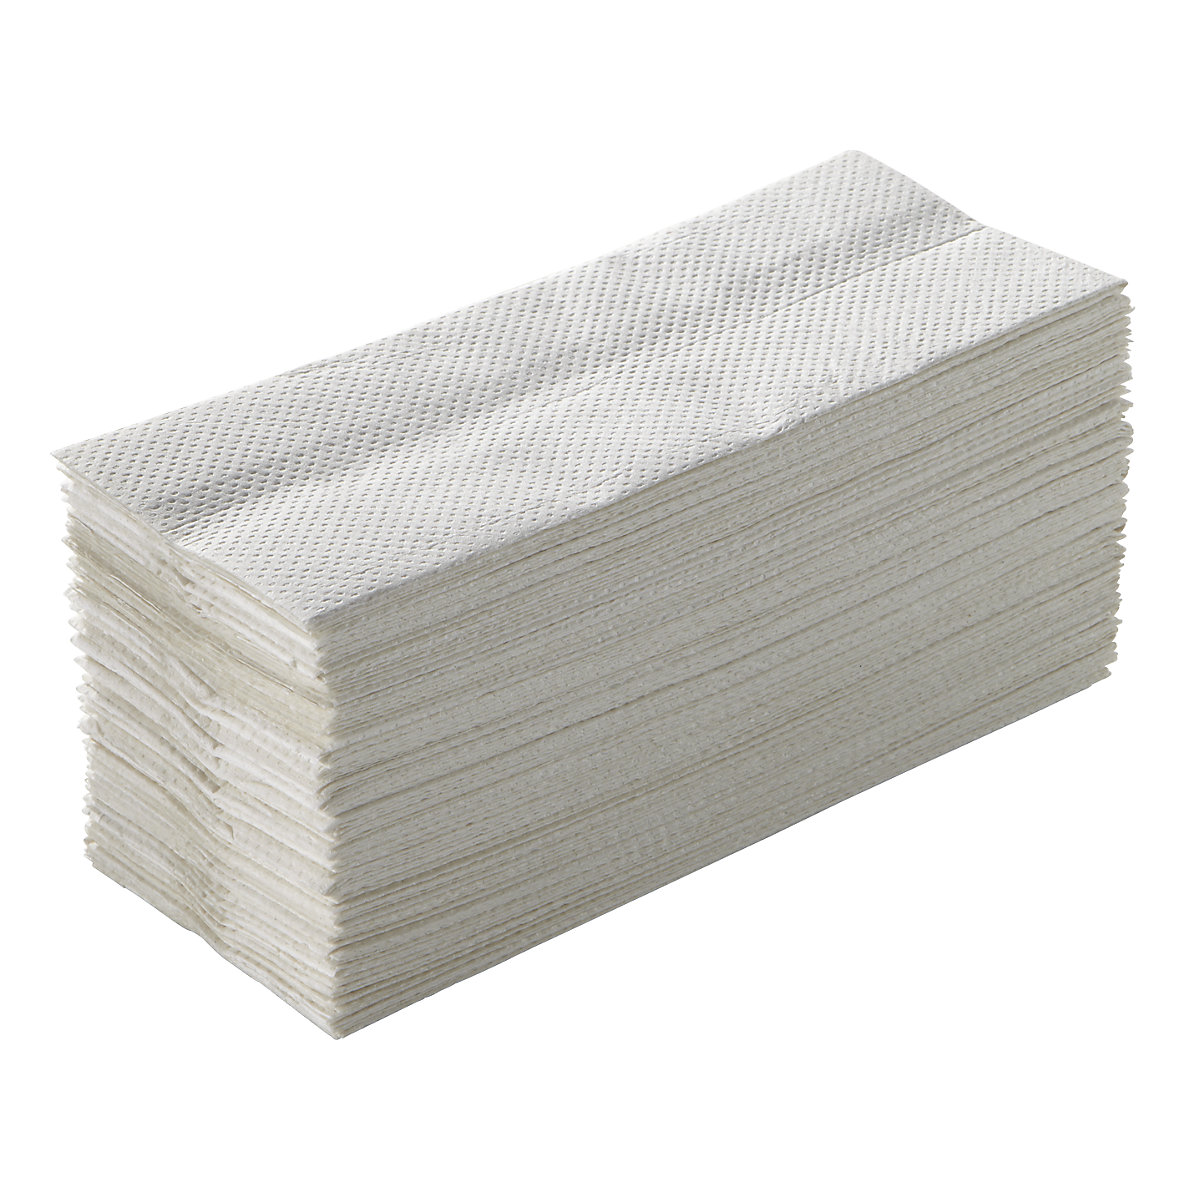 Folded paper towels – TORK: tissue, natural white